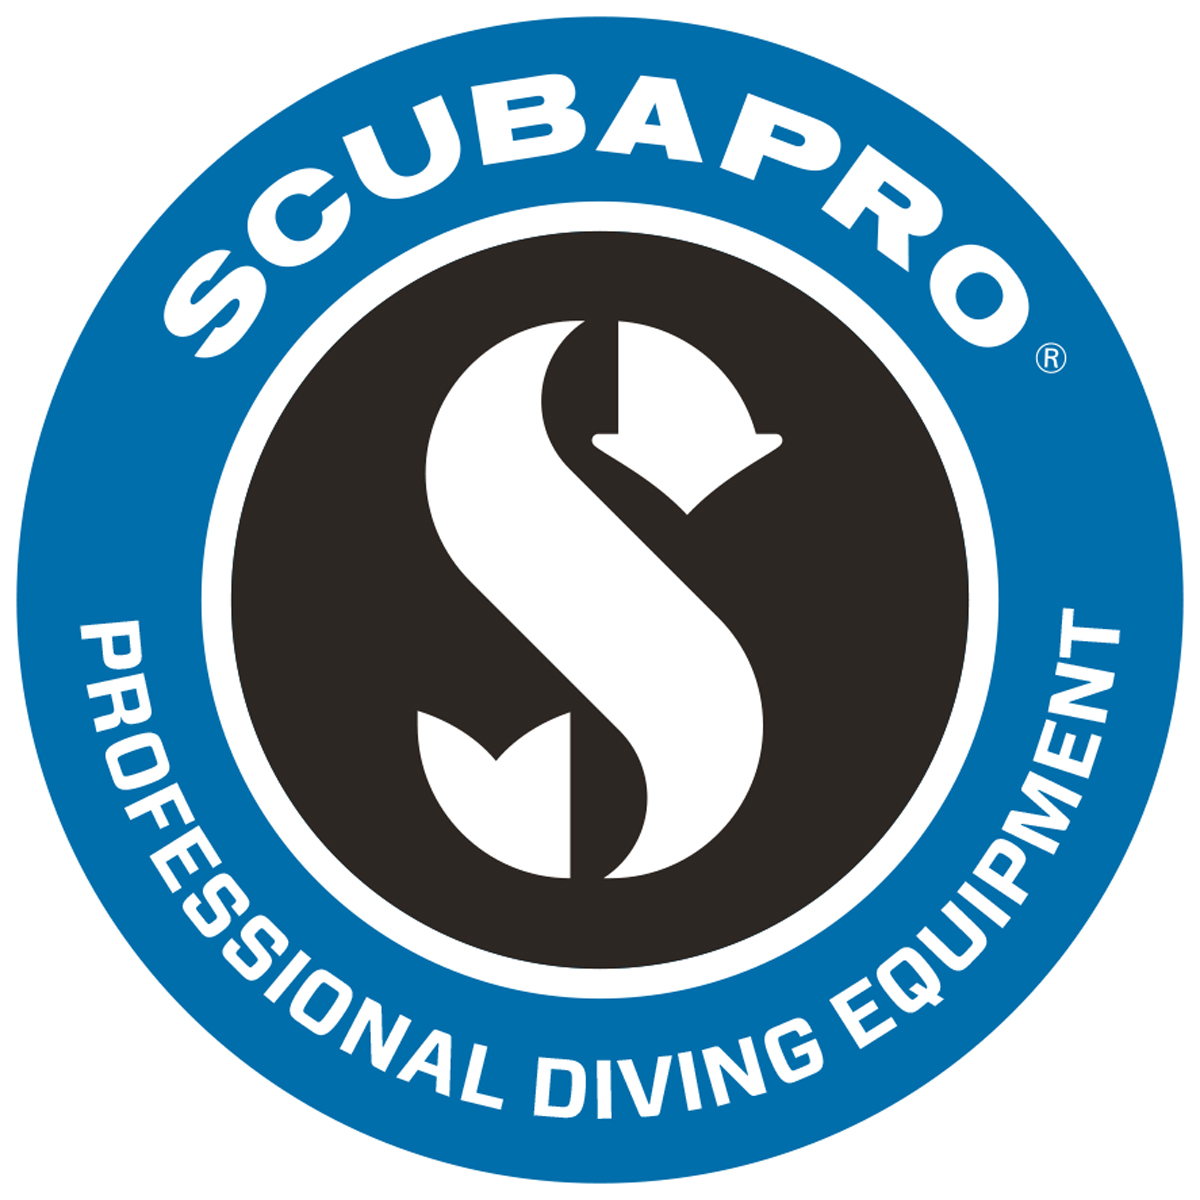 Scubapro Professional Diving Equipment